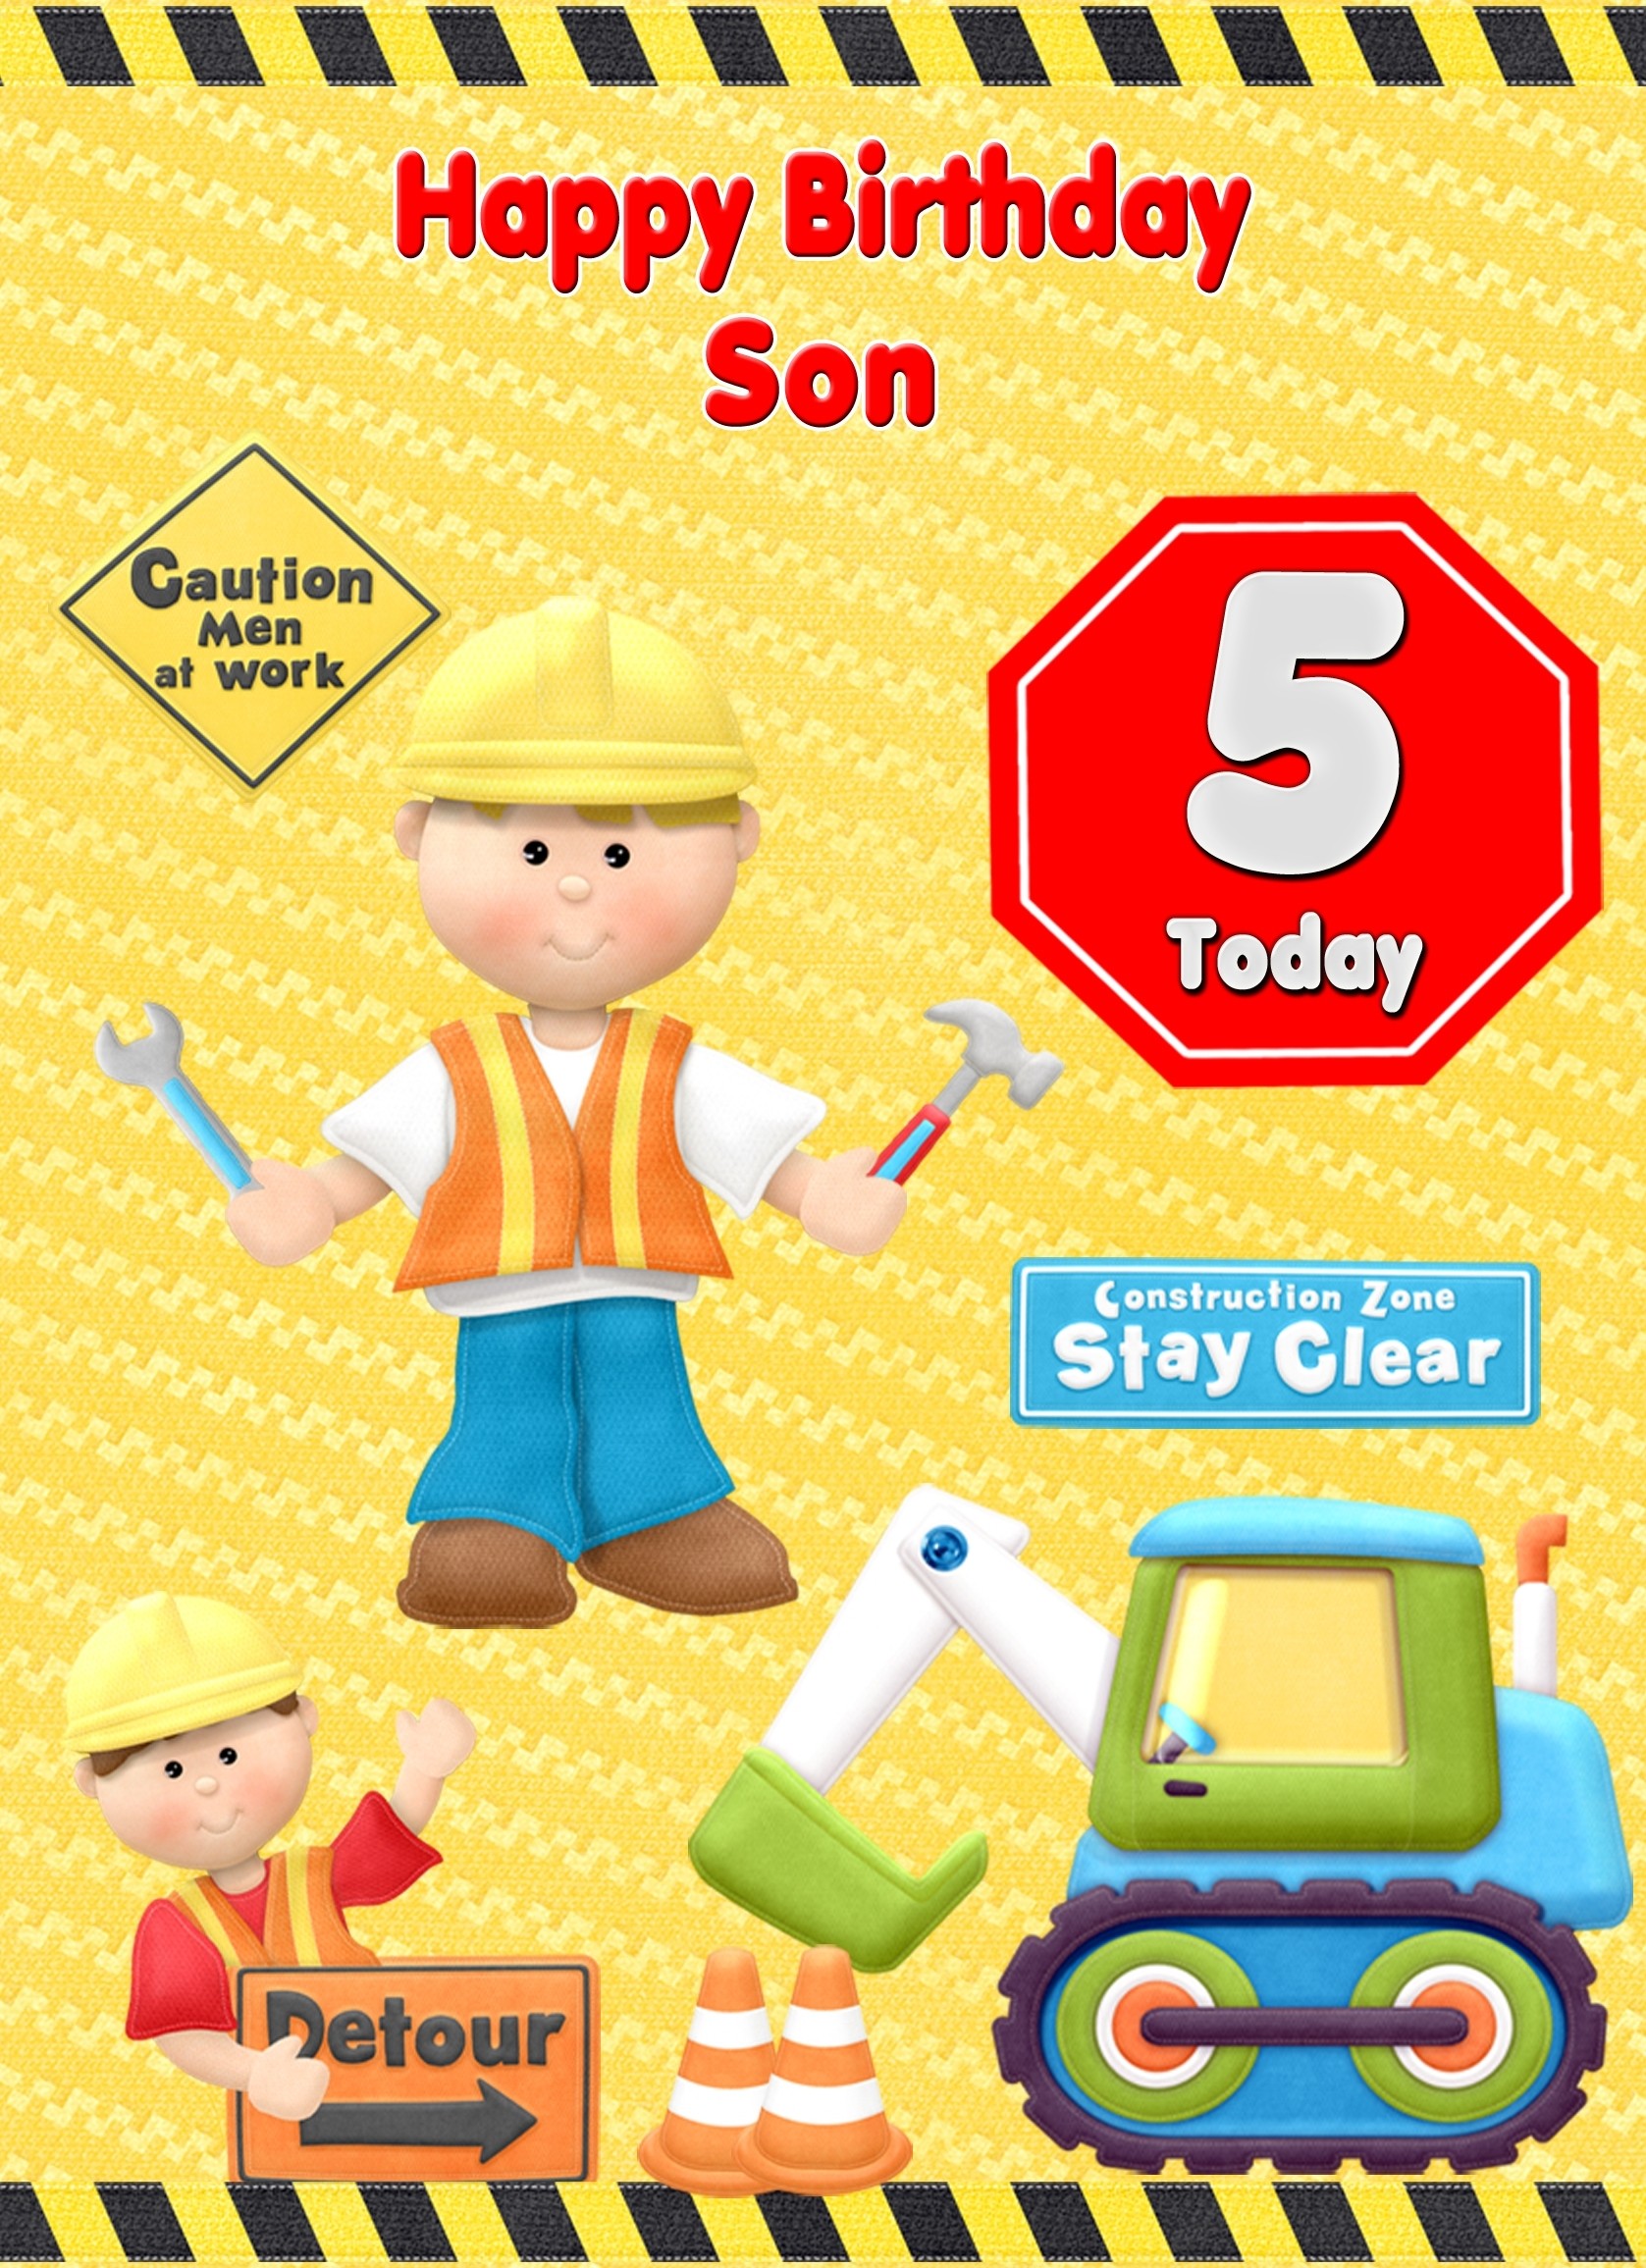 Kids 5th Birthday Builder Cartoon Card for Son